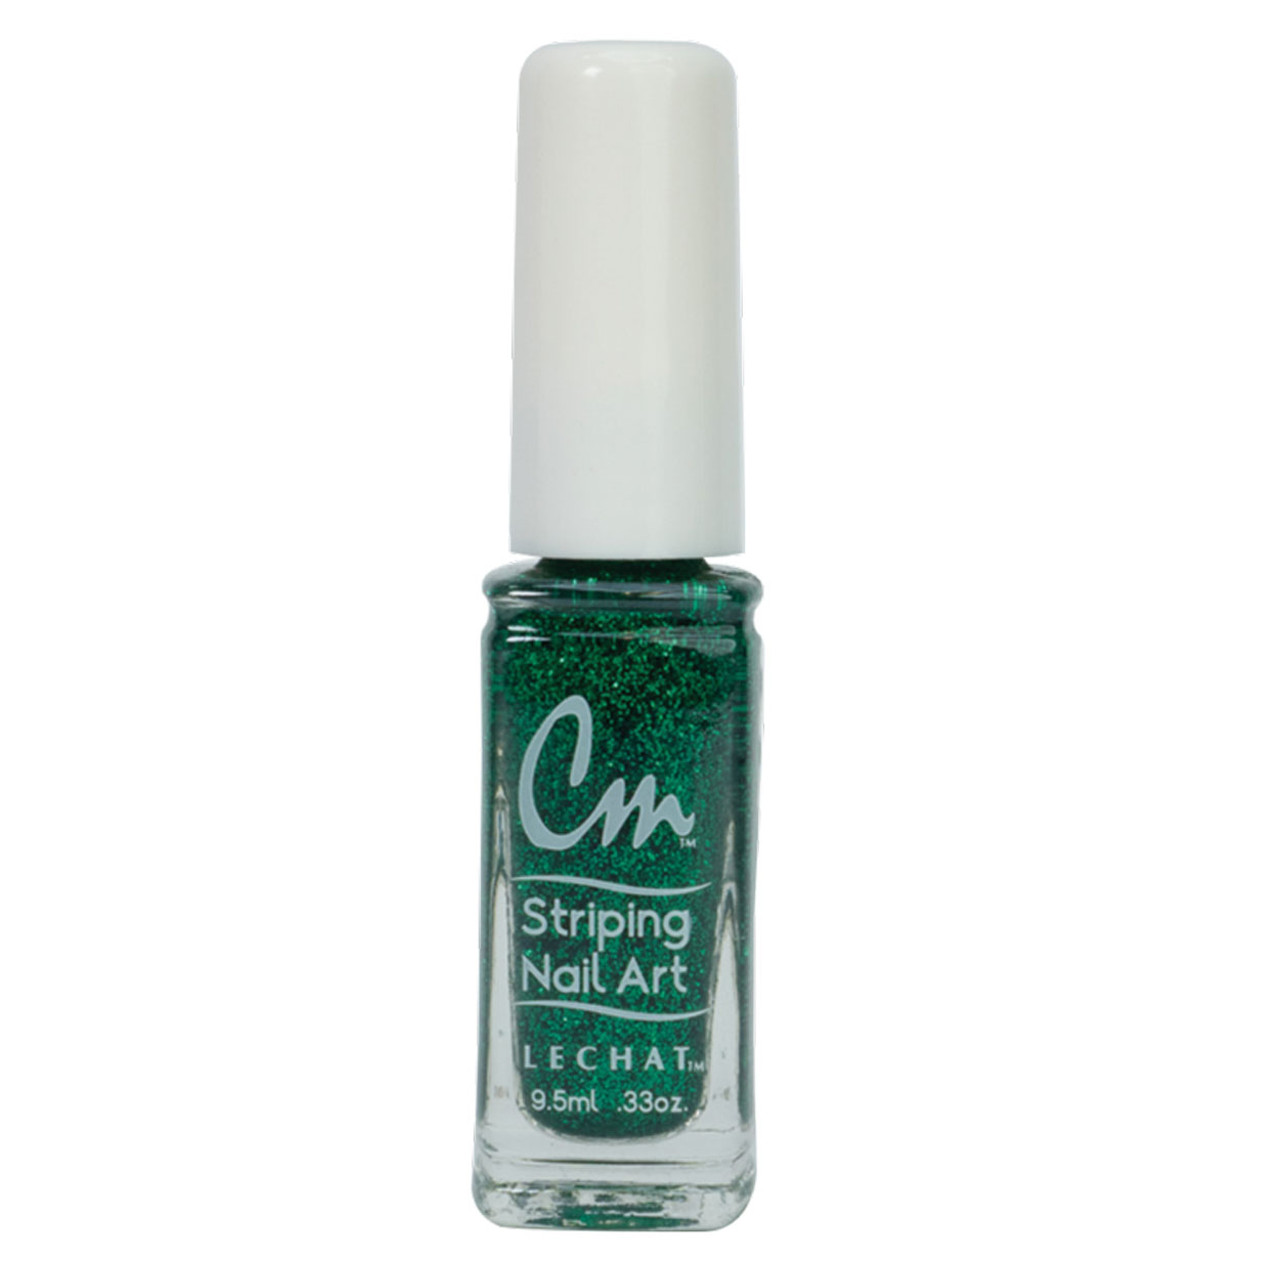 LeChat Cm Striping Nail Art - Green Glitter